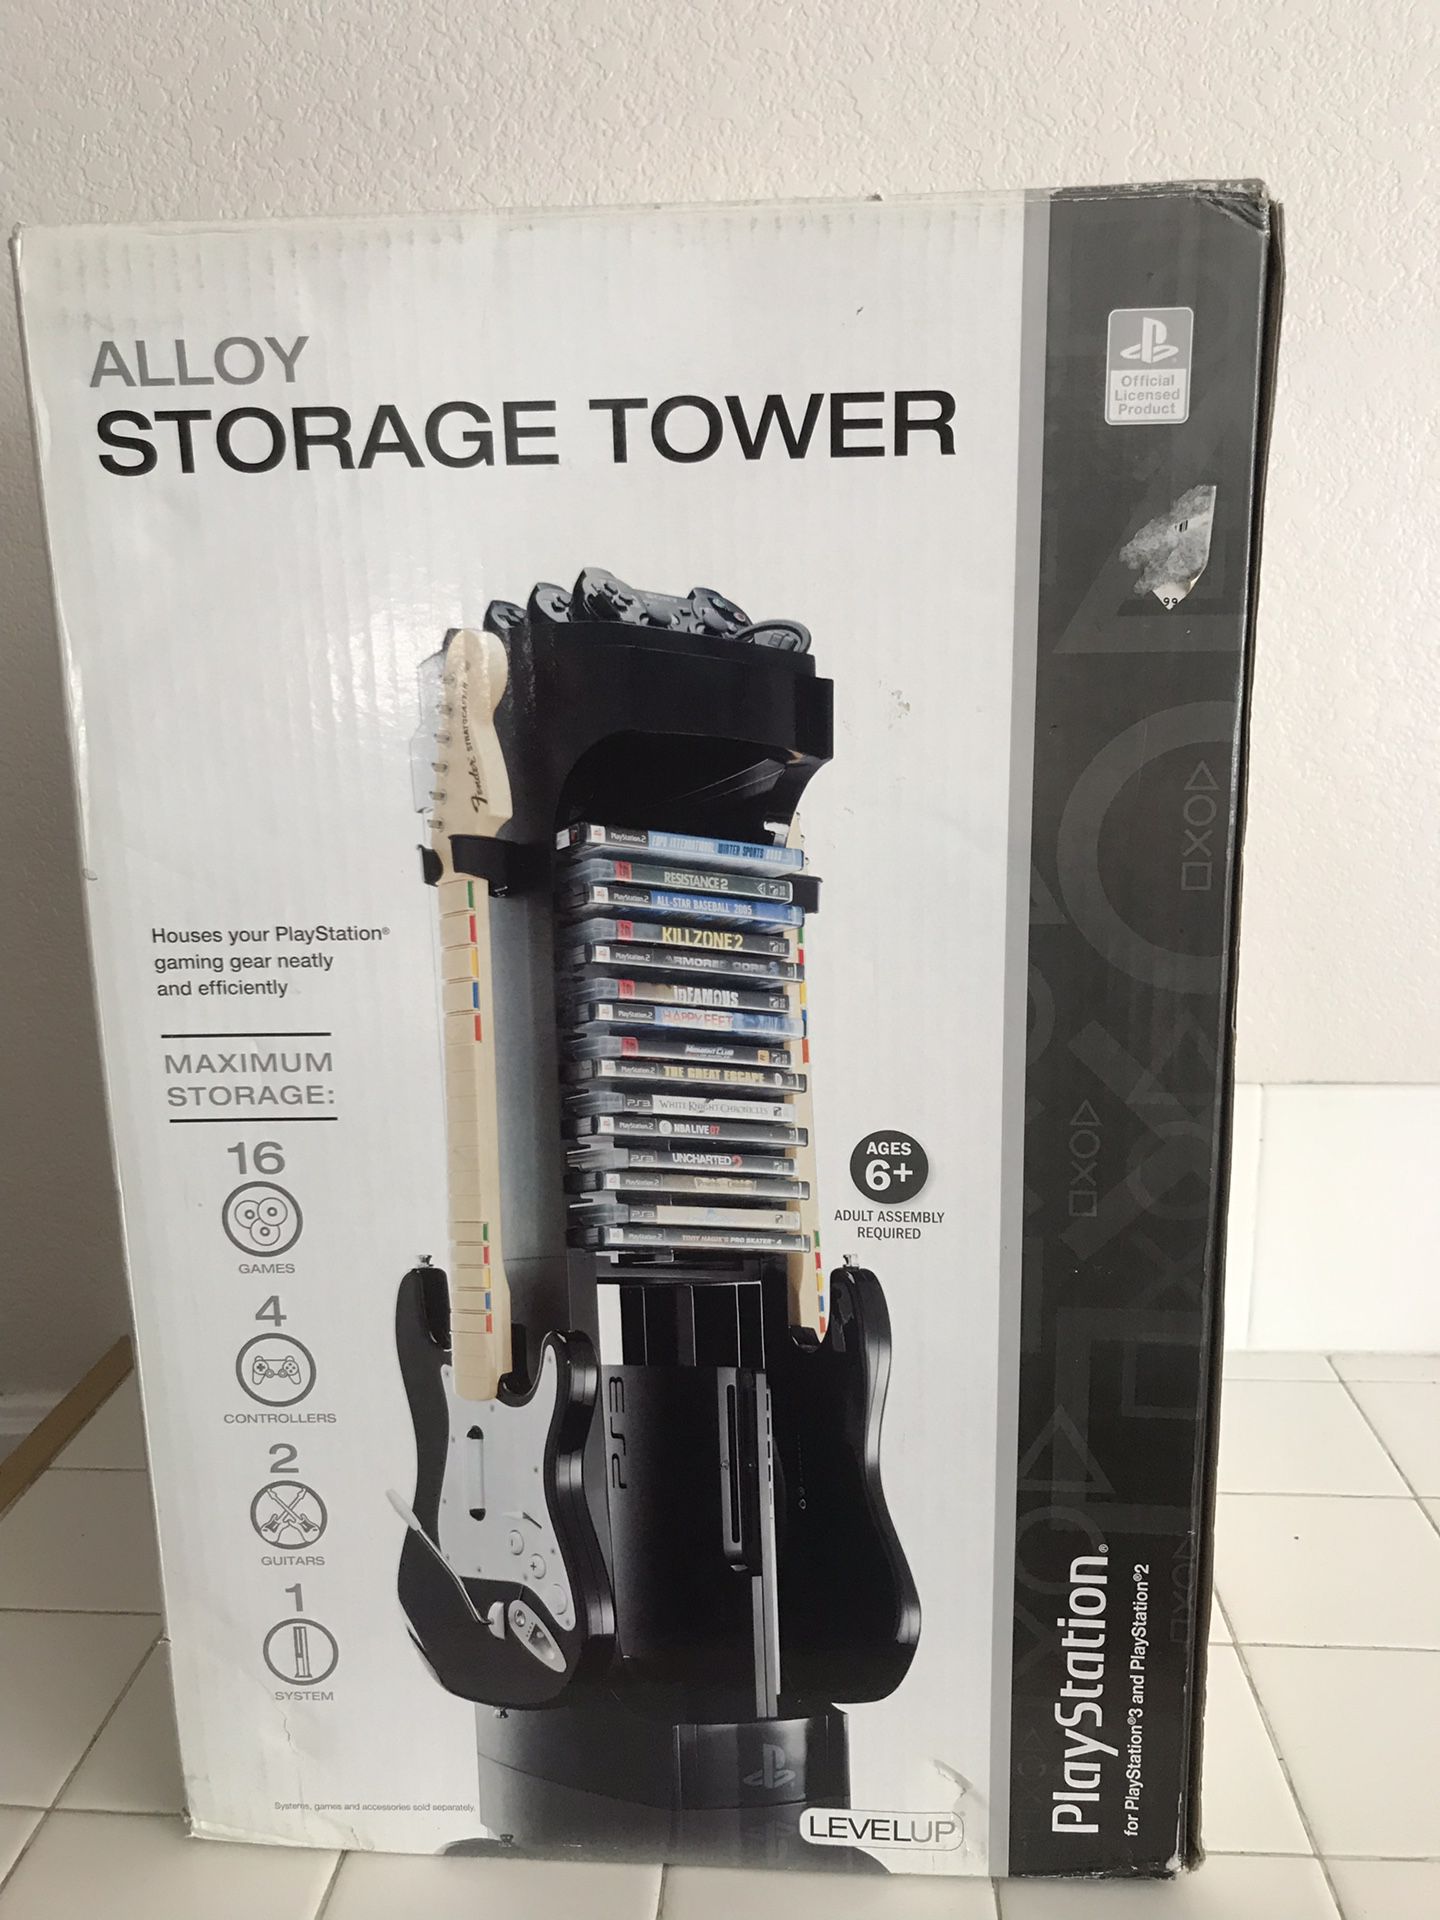 Playstation storage tower